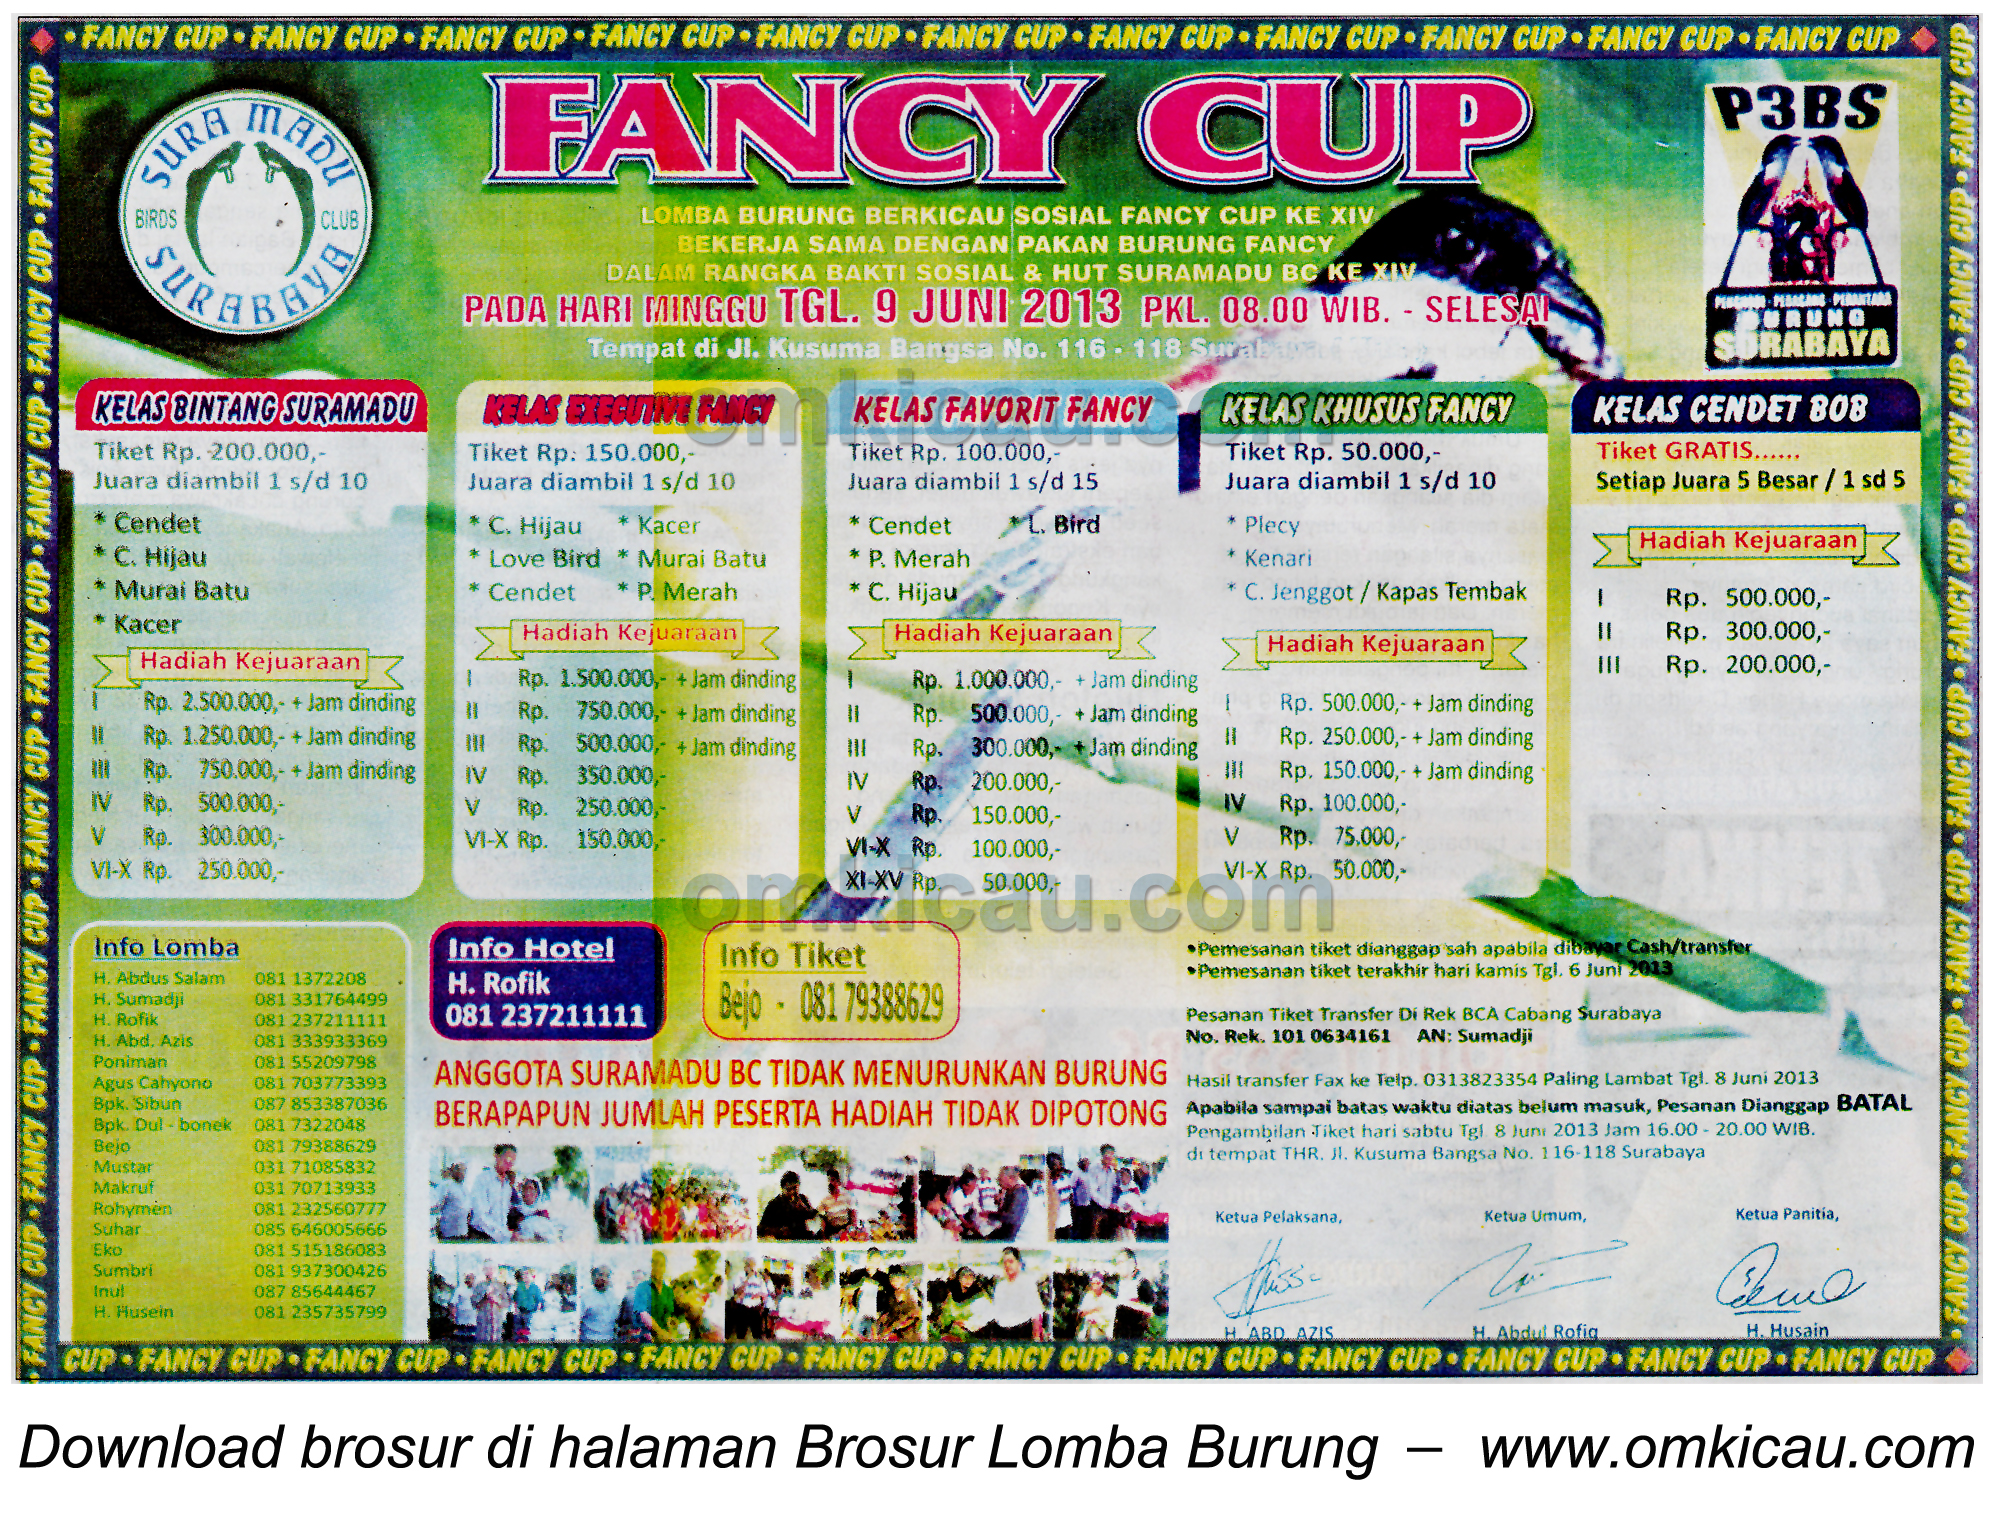 Brosur Lomba Burung Fancy Cup, Surabaya, 9 Juni 2013